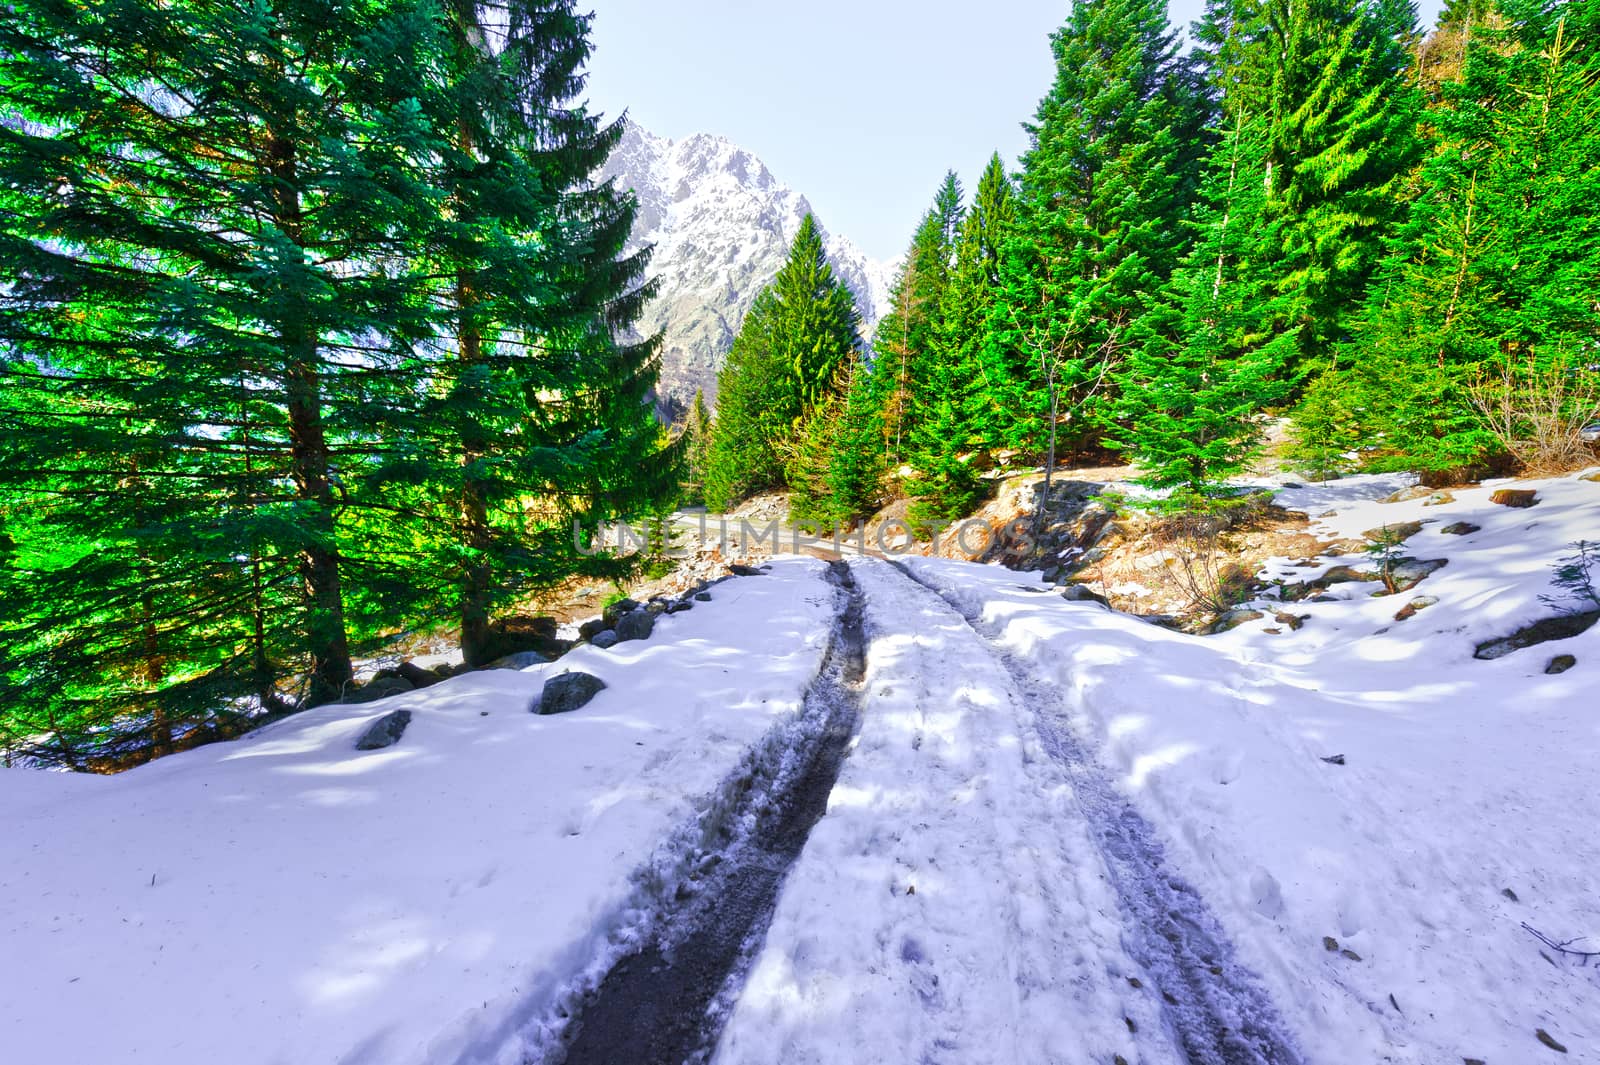 Melting Snow on the Mountainous Road in the Italian Alps